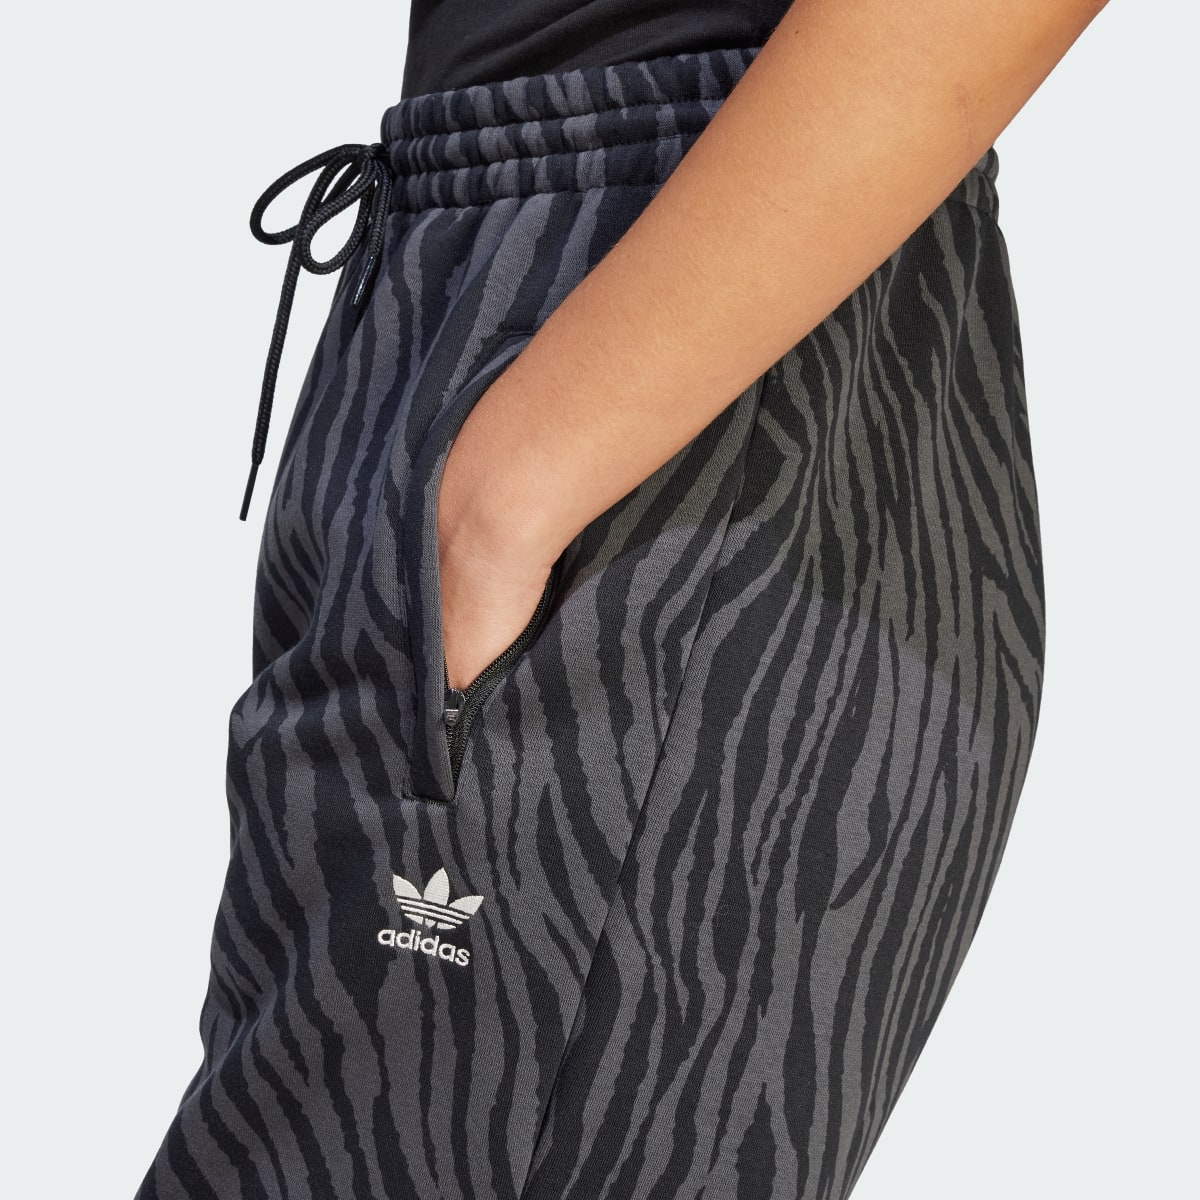 Adidas Spodnie dresowe Allover Zebra Animal Print Essentials. 5